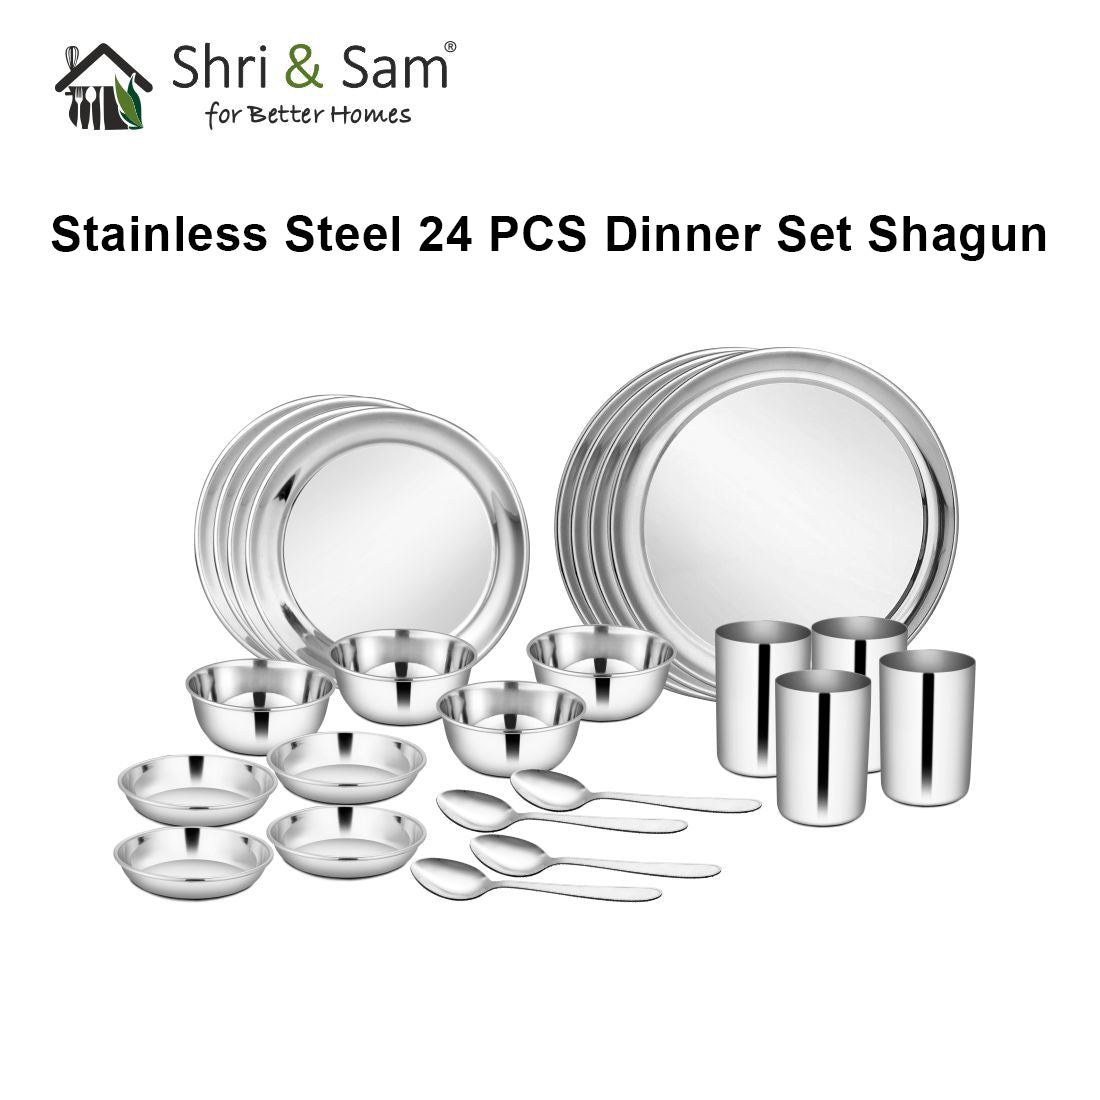 Stainless Steel 24 PCS Dinner Set (4 People) Shagun